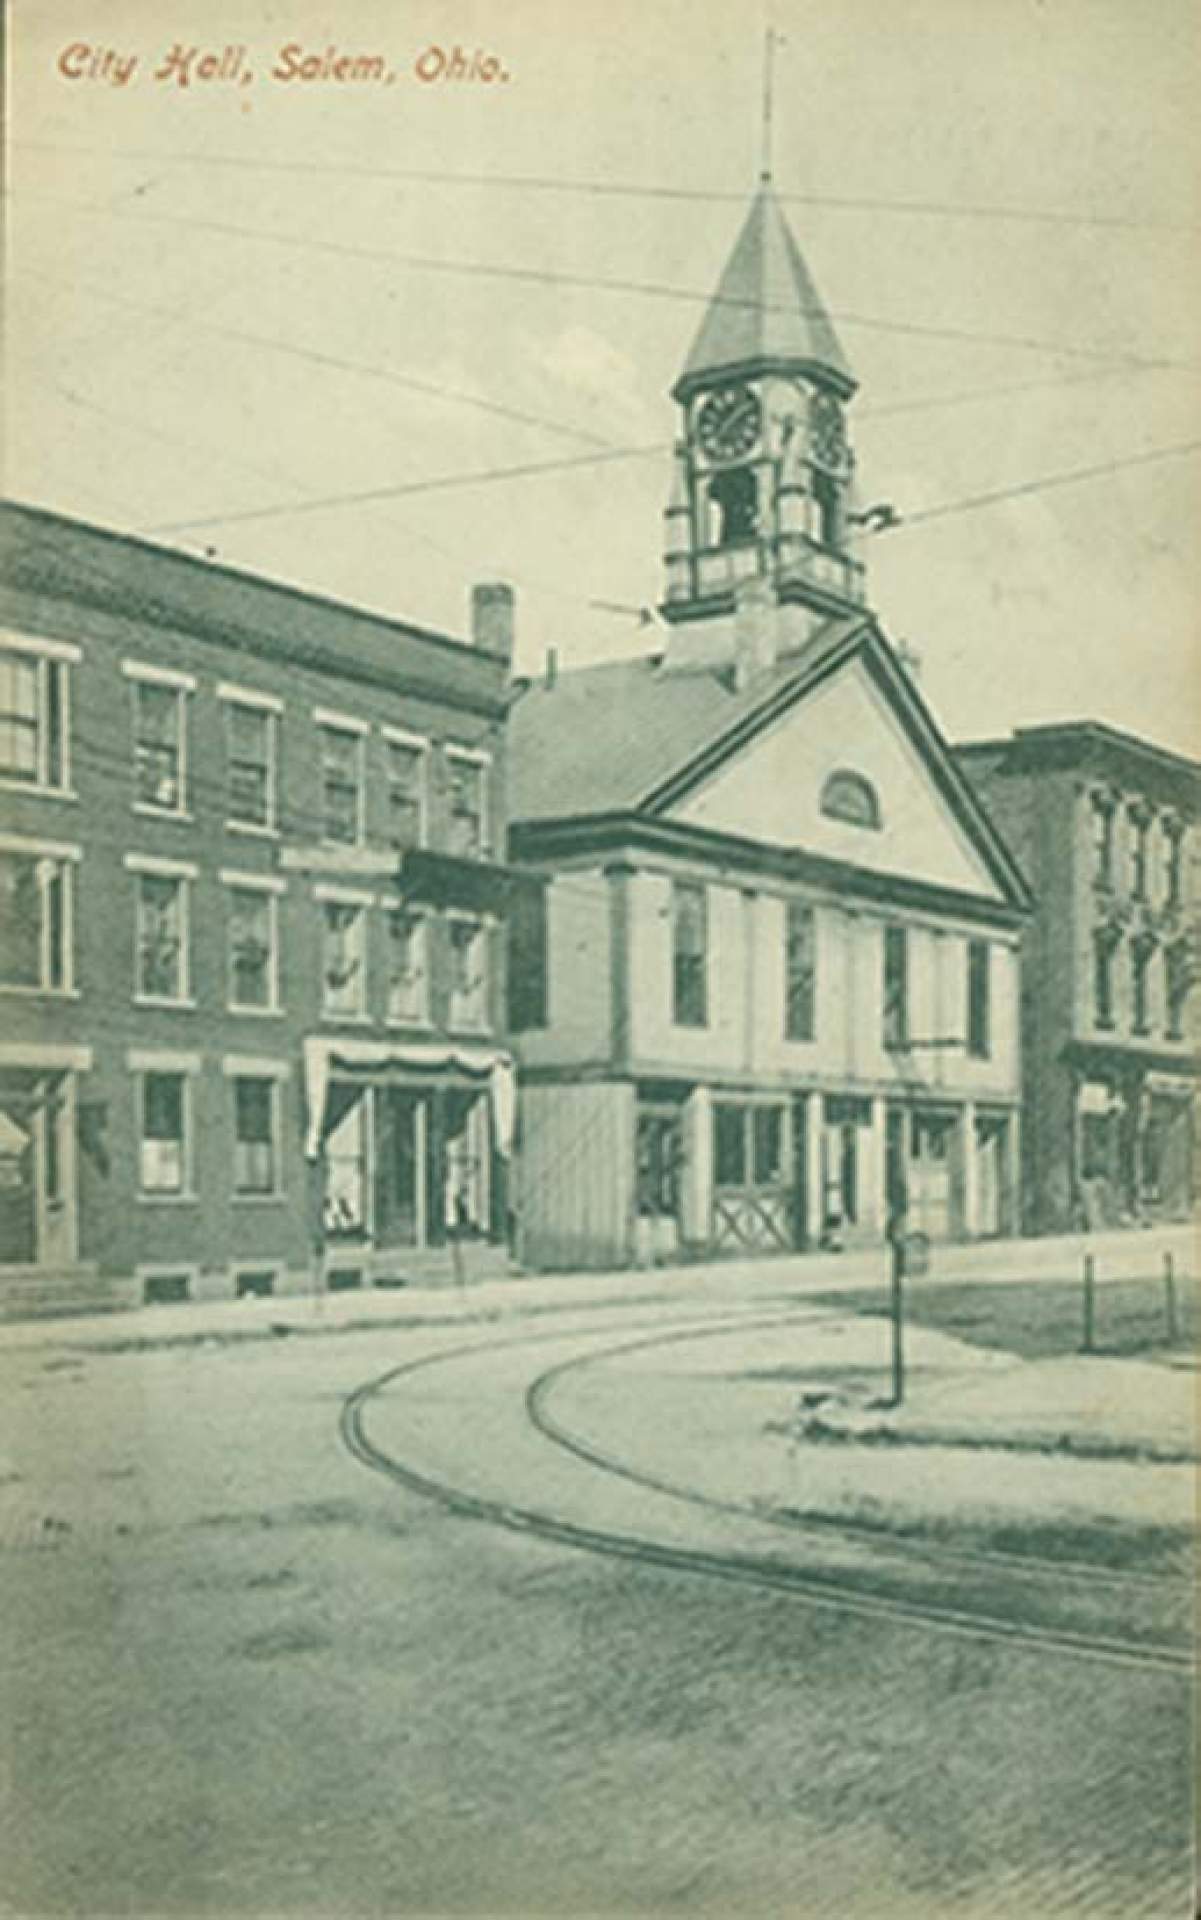 Postcard, City Hall, Salem, Ohio